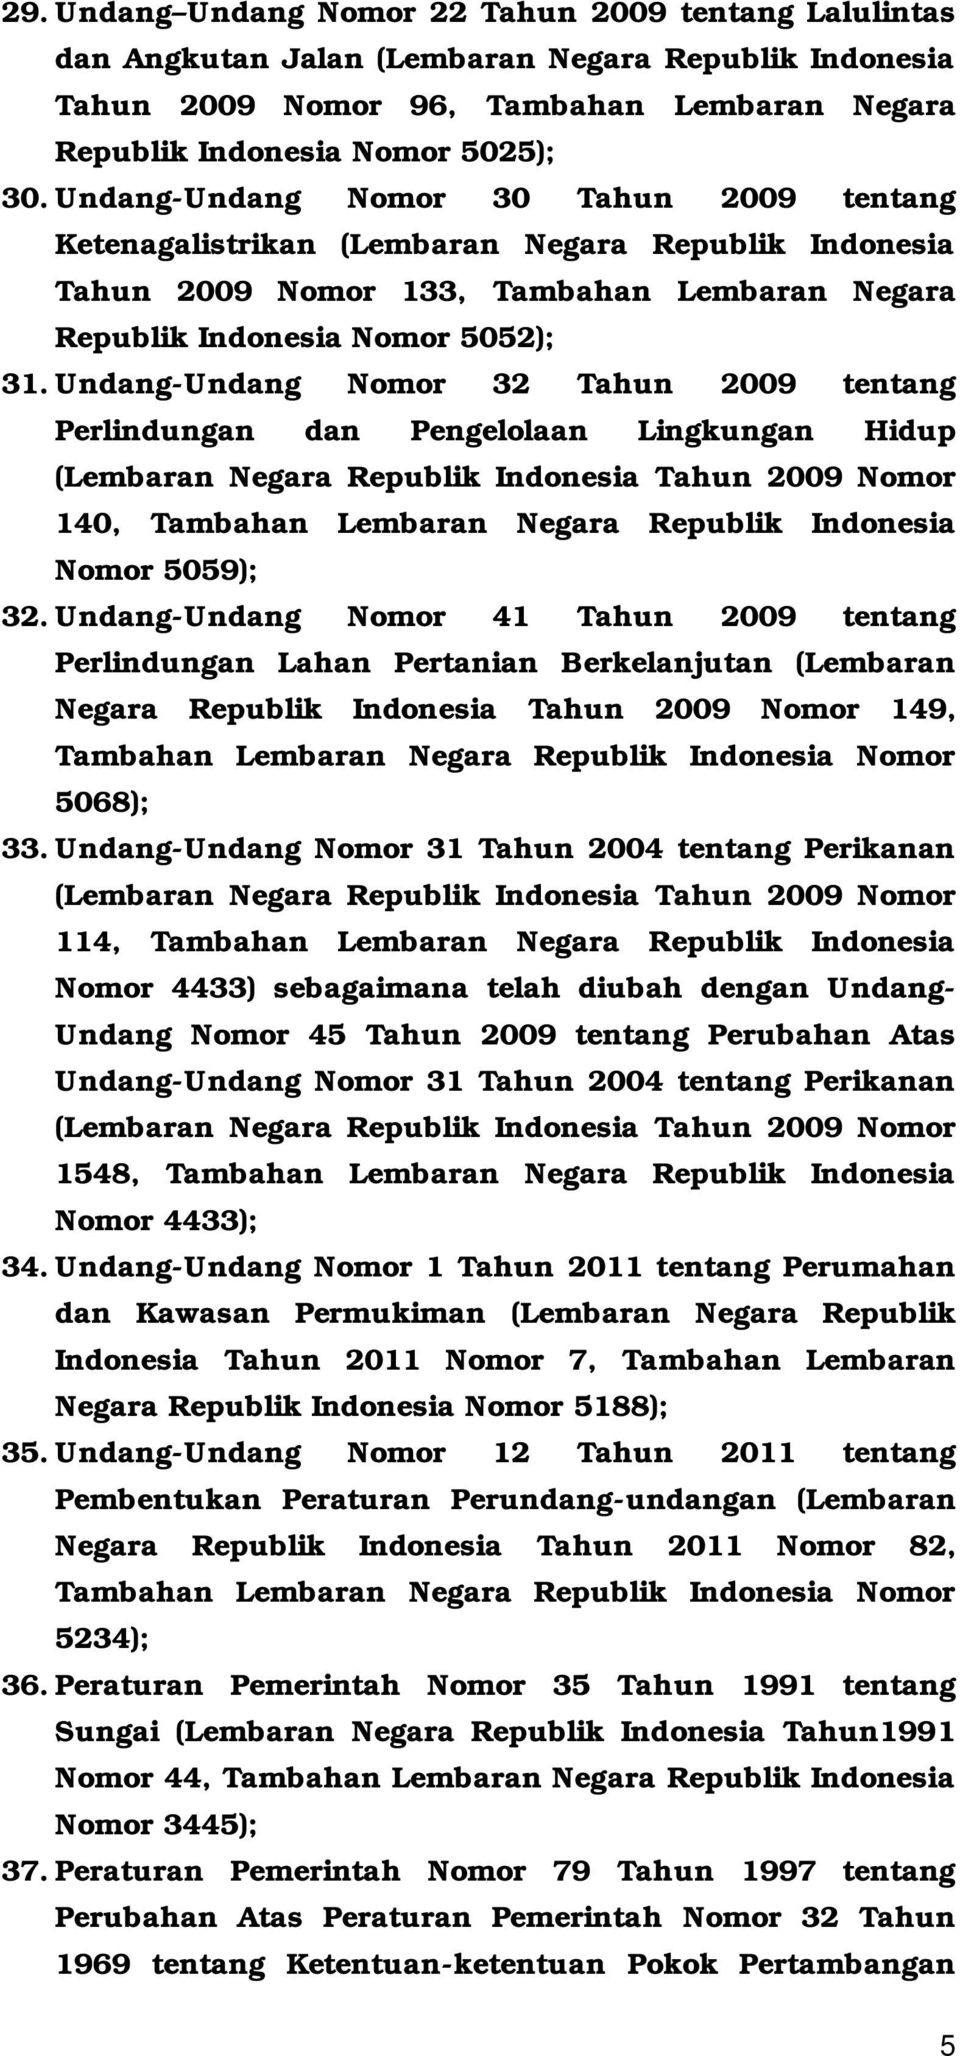 Undang-Undang Nomor 32 Tahun 2009 tentang Perlindungan dan Pengelolaan Lingkungan Hidup (Lembaran Negara Republik Indonesia Tahun 2009 Nomor 140, Tambahan Lembaran Negara Republik Indonesia Nomor